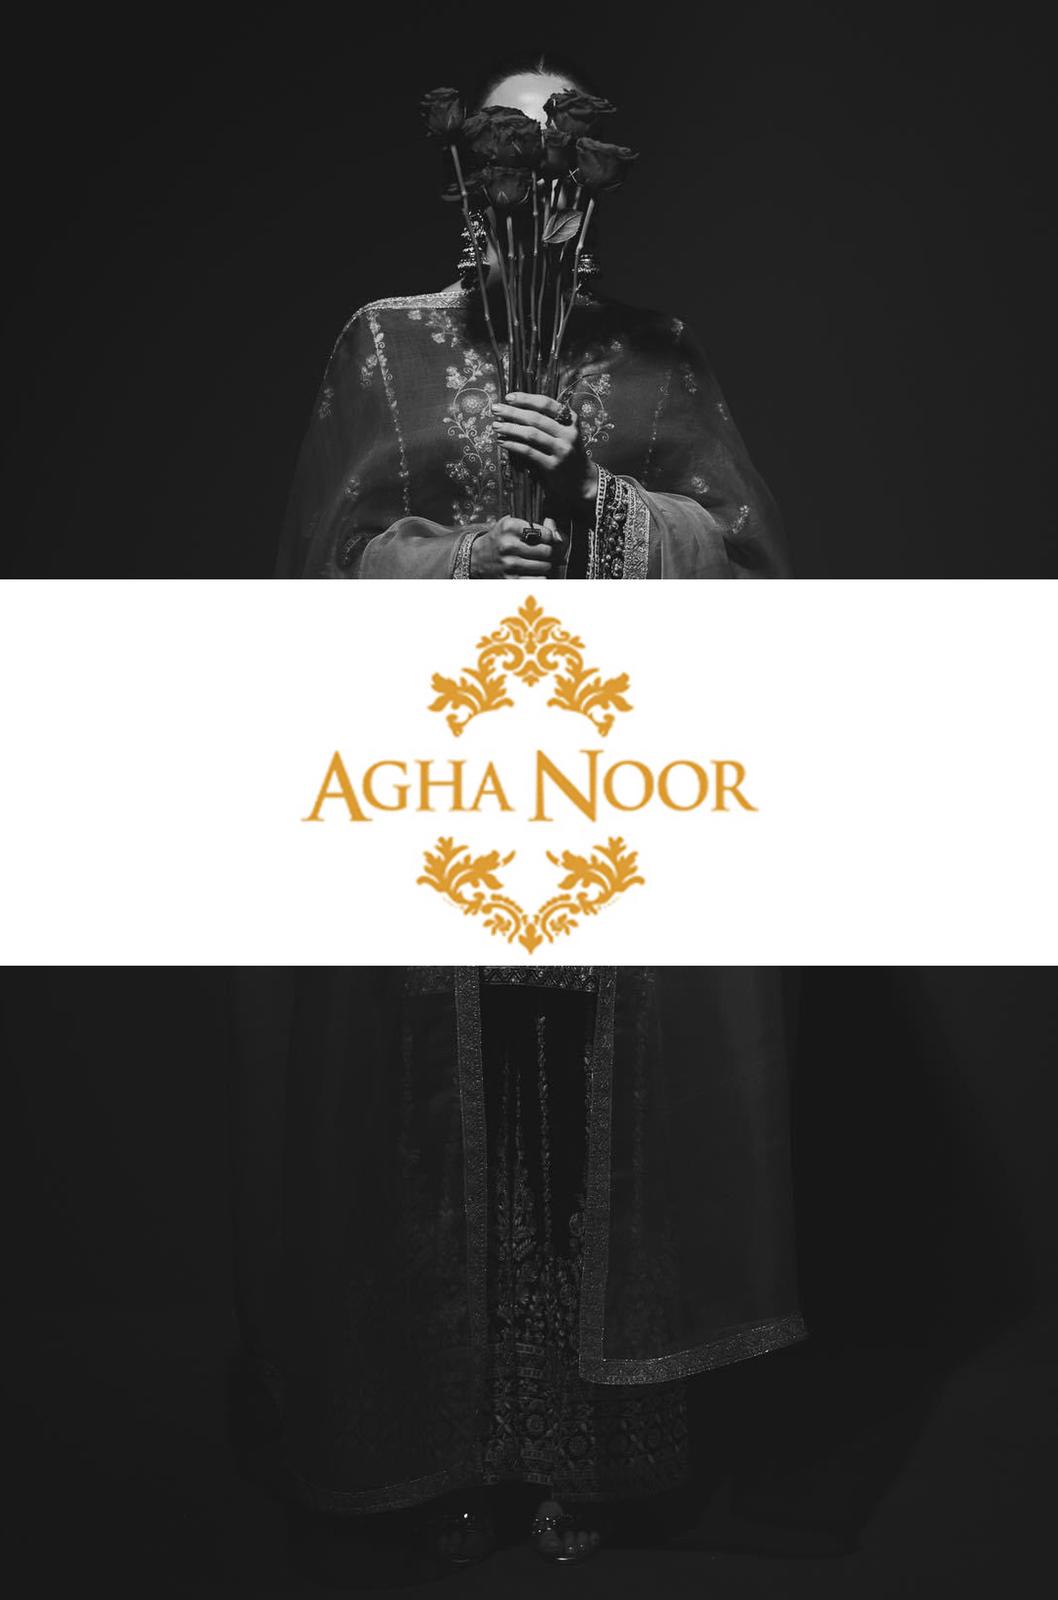 Agha Noor